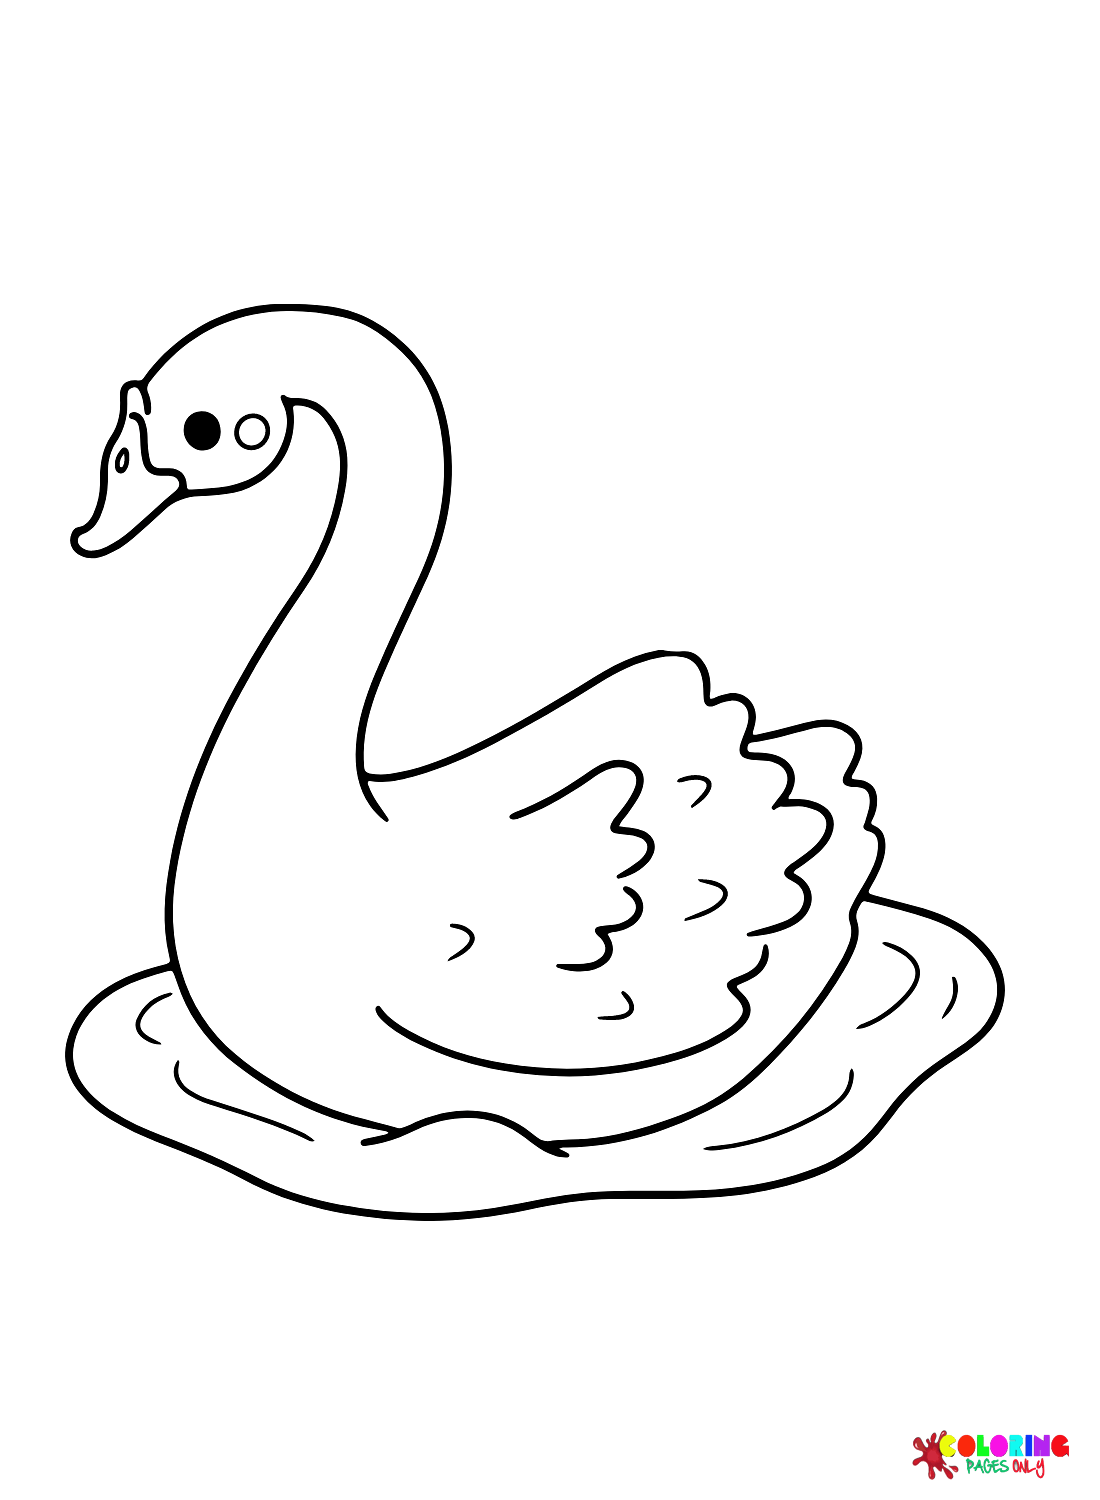 Lovely Swan from Swan